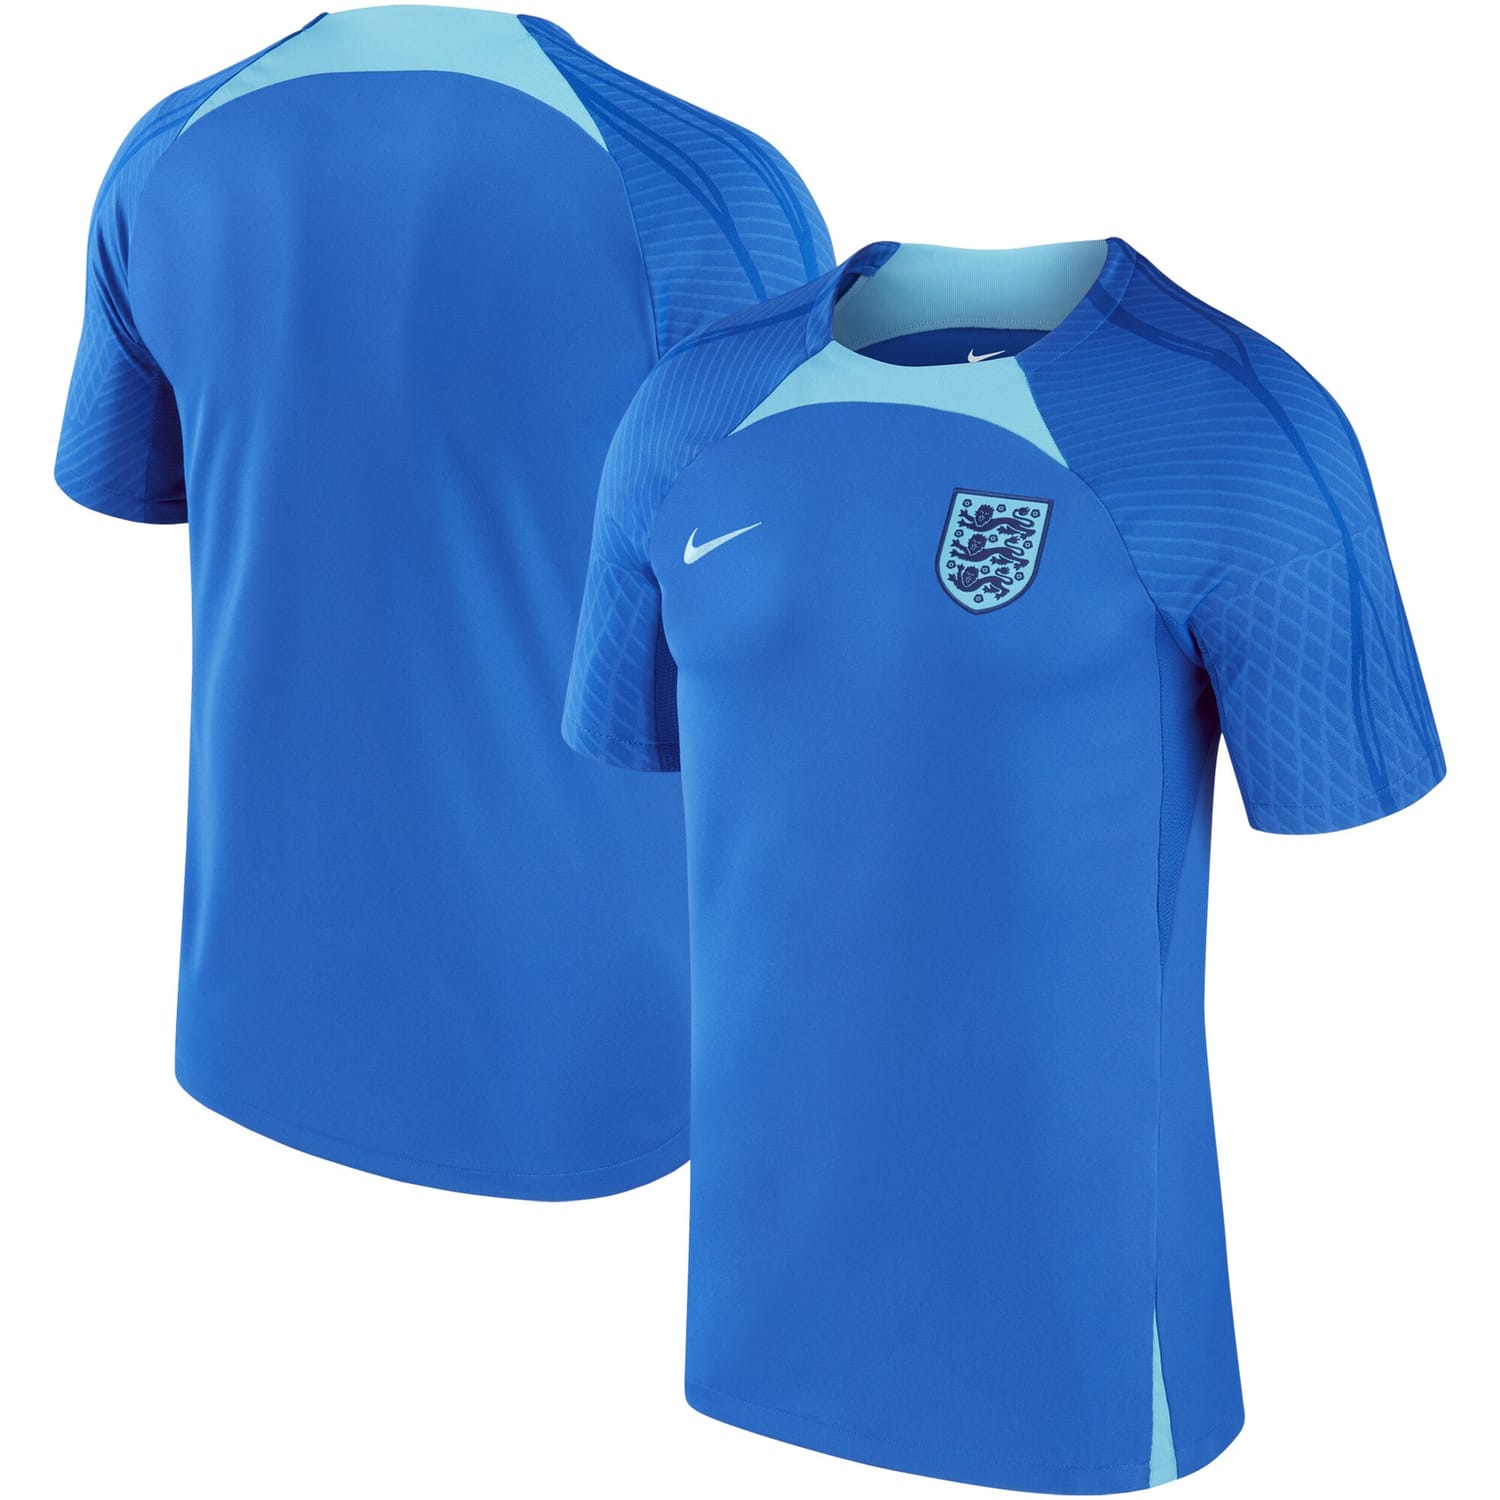 England National Team Training Jersey Shirt Blue for Men